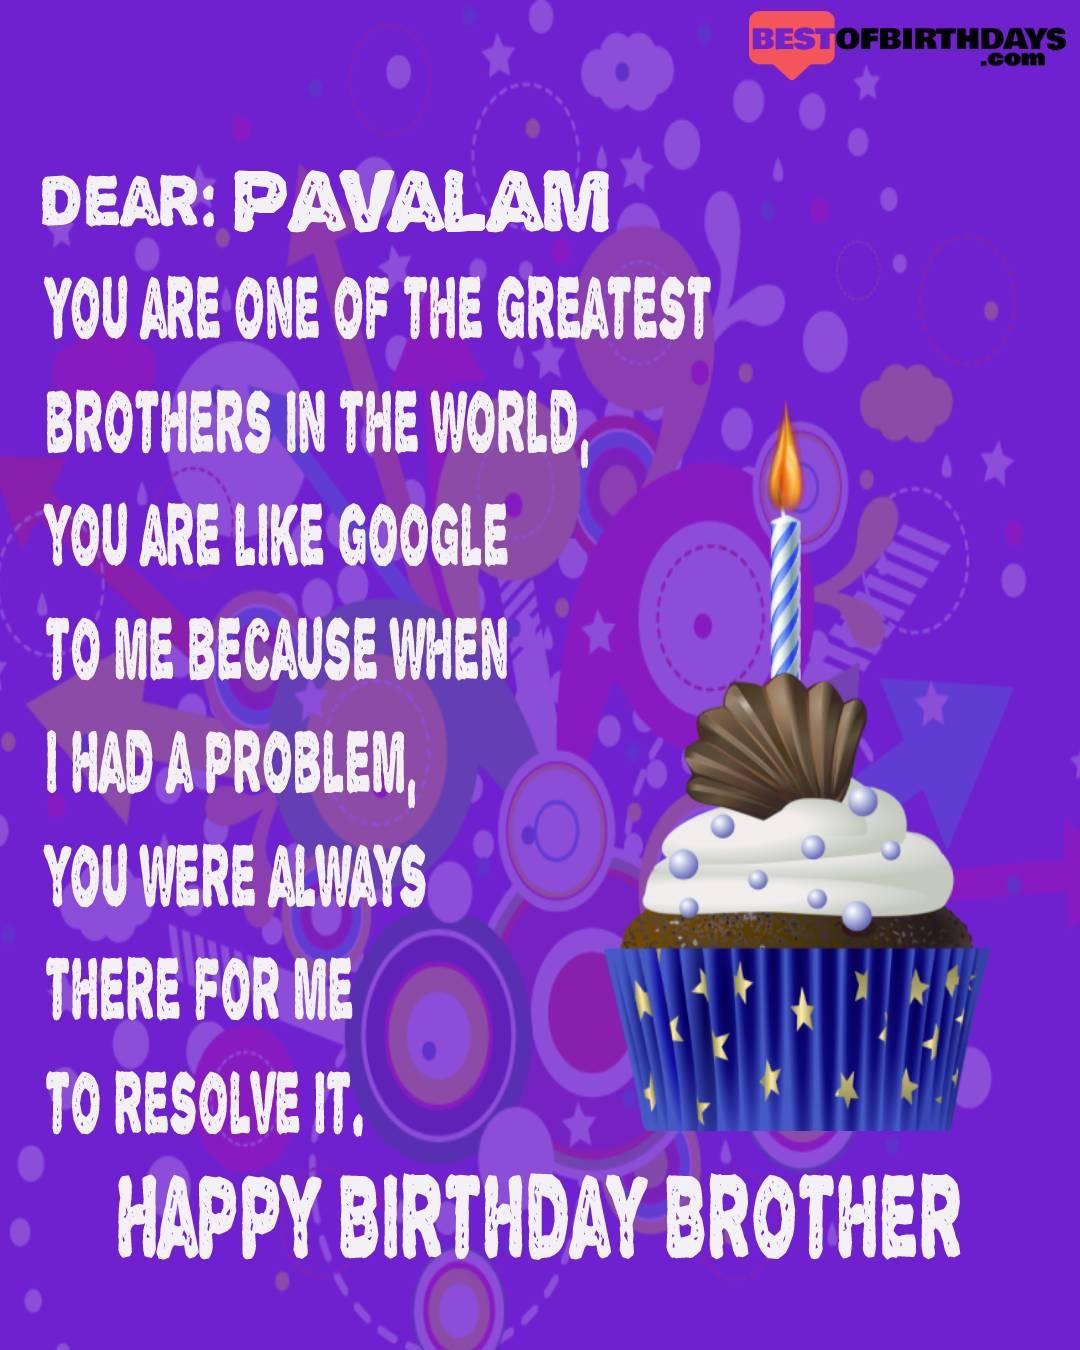 Happy birthday pavalam bhai brother bro